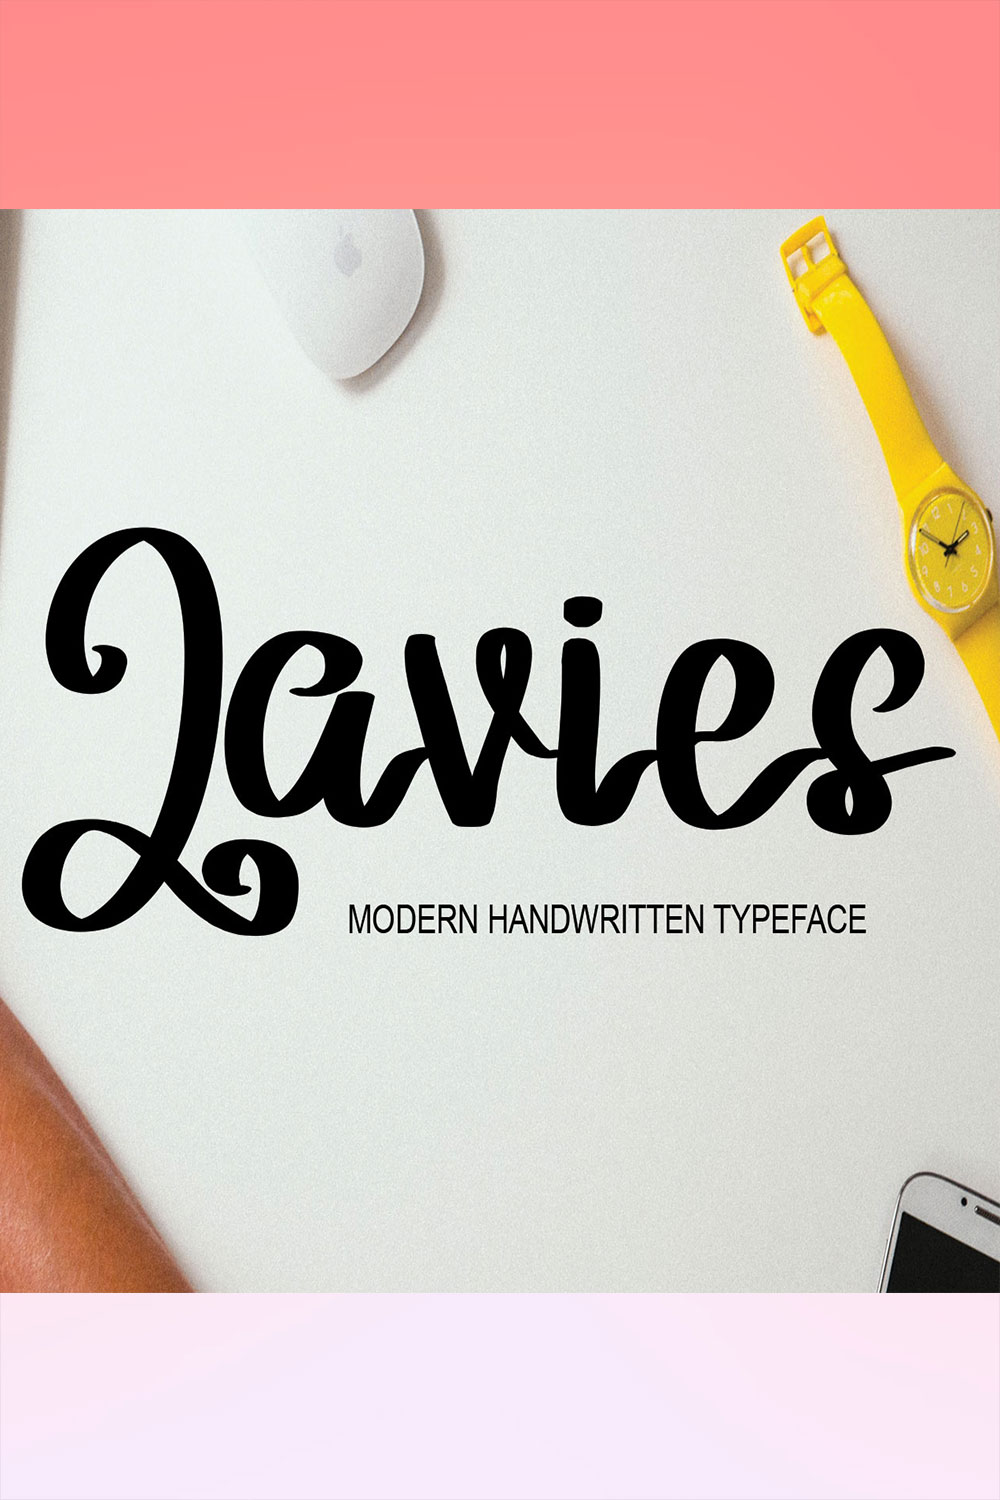 Javies Script Signature Font Pinterest collage image.